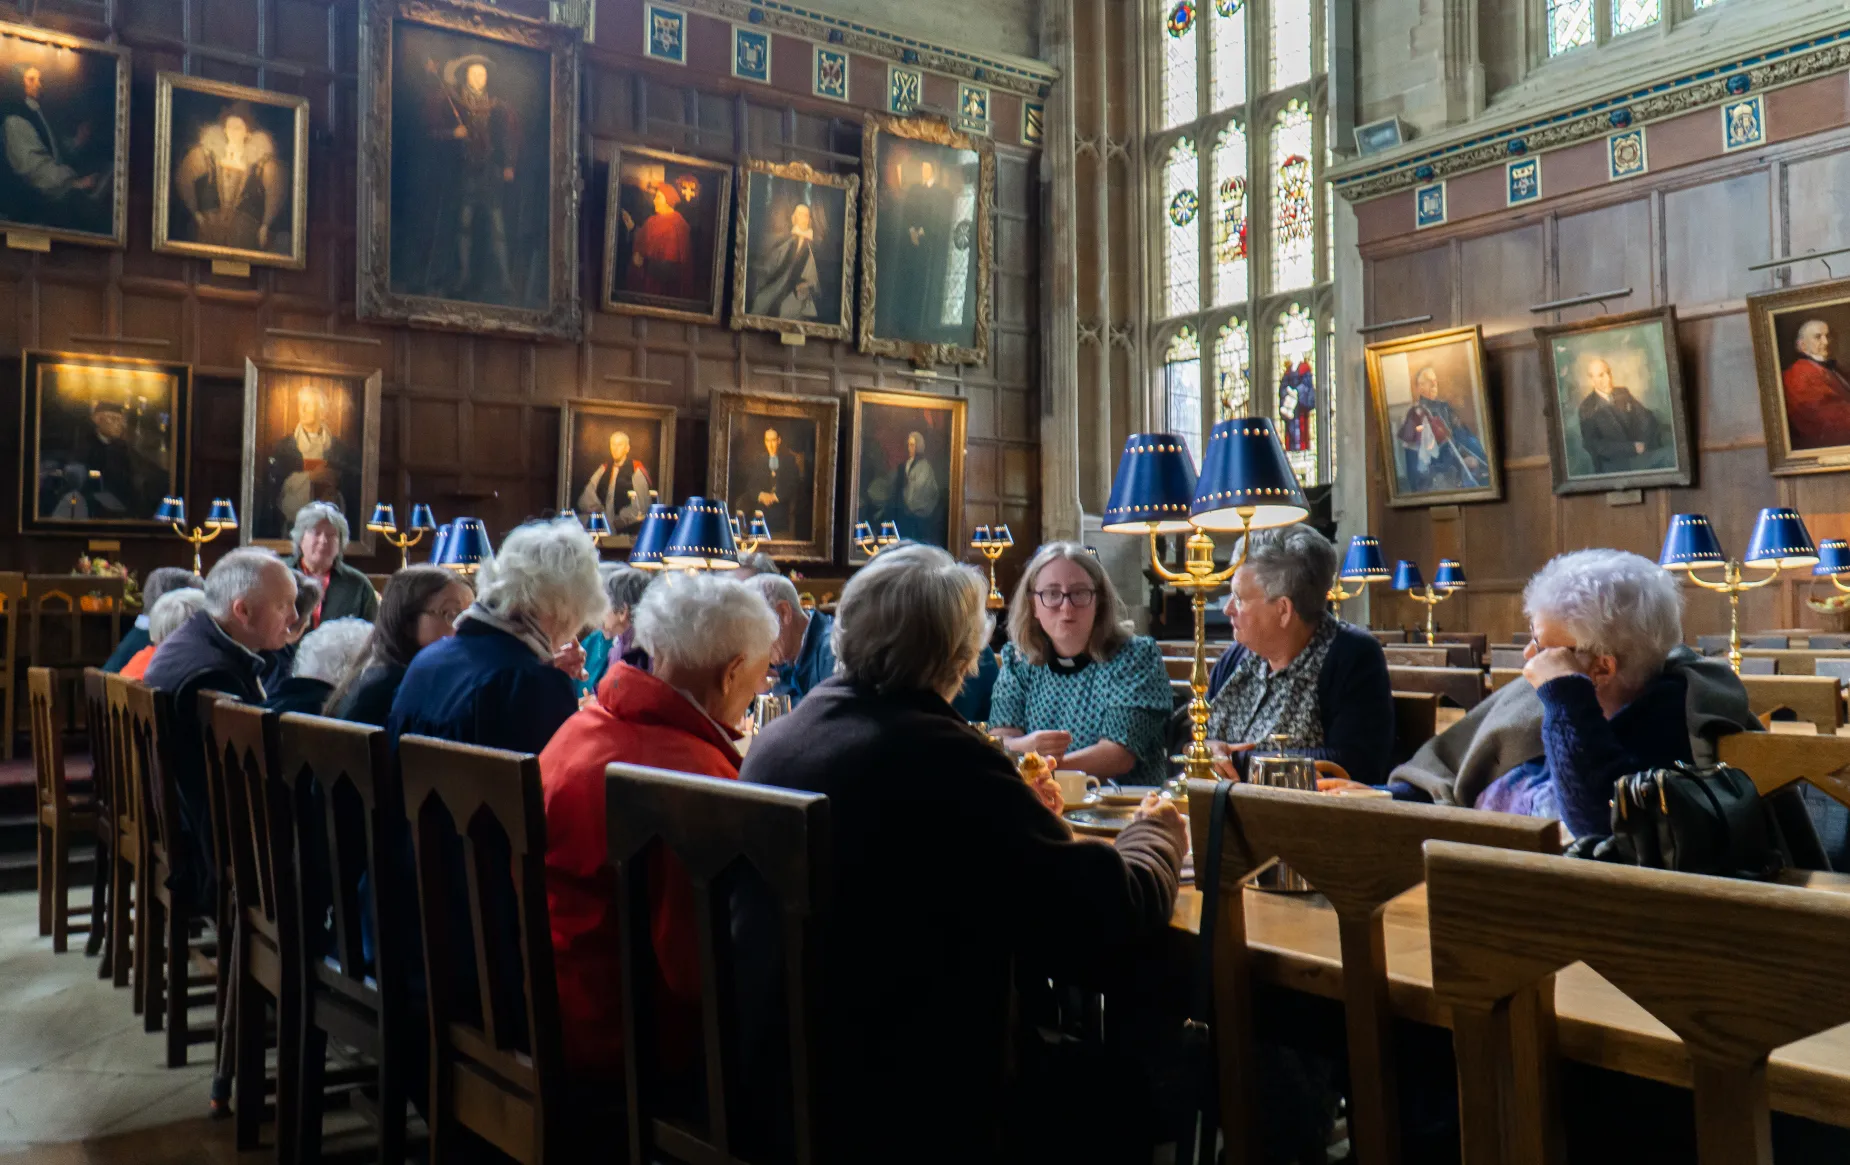 Parish pilgrims sit in the great hall having afternoon tea